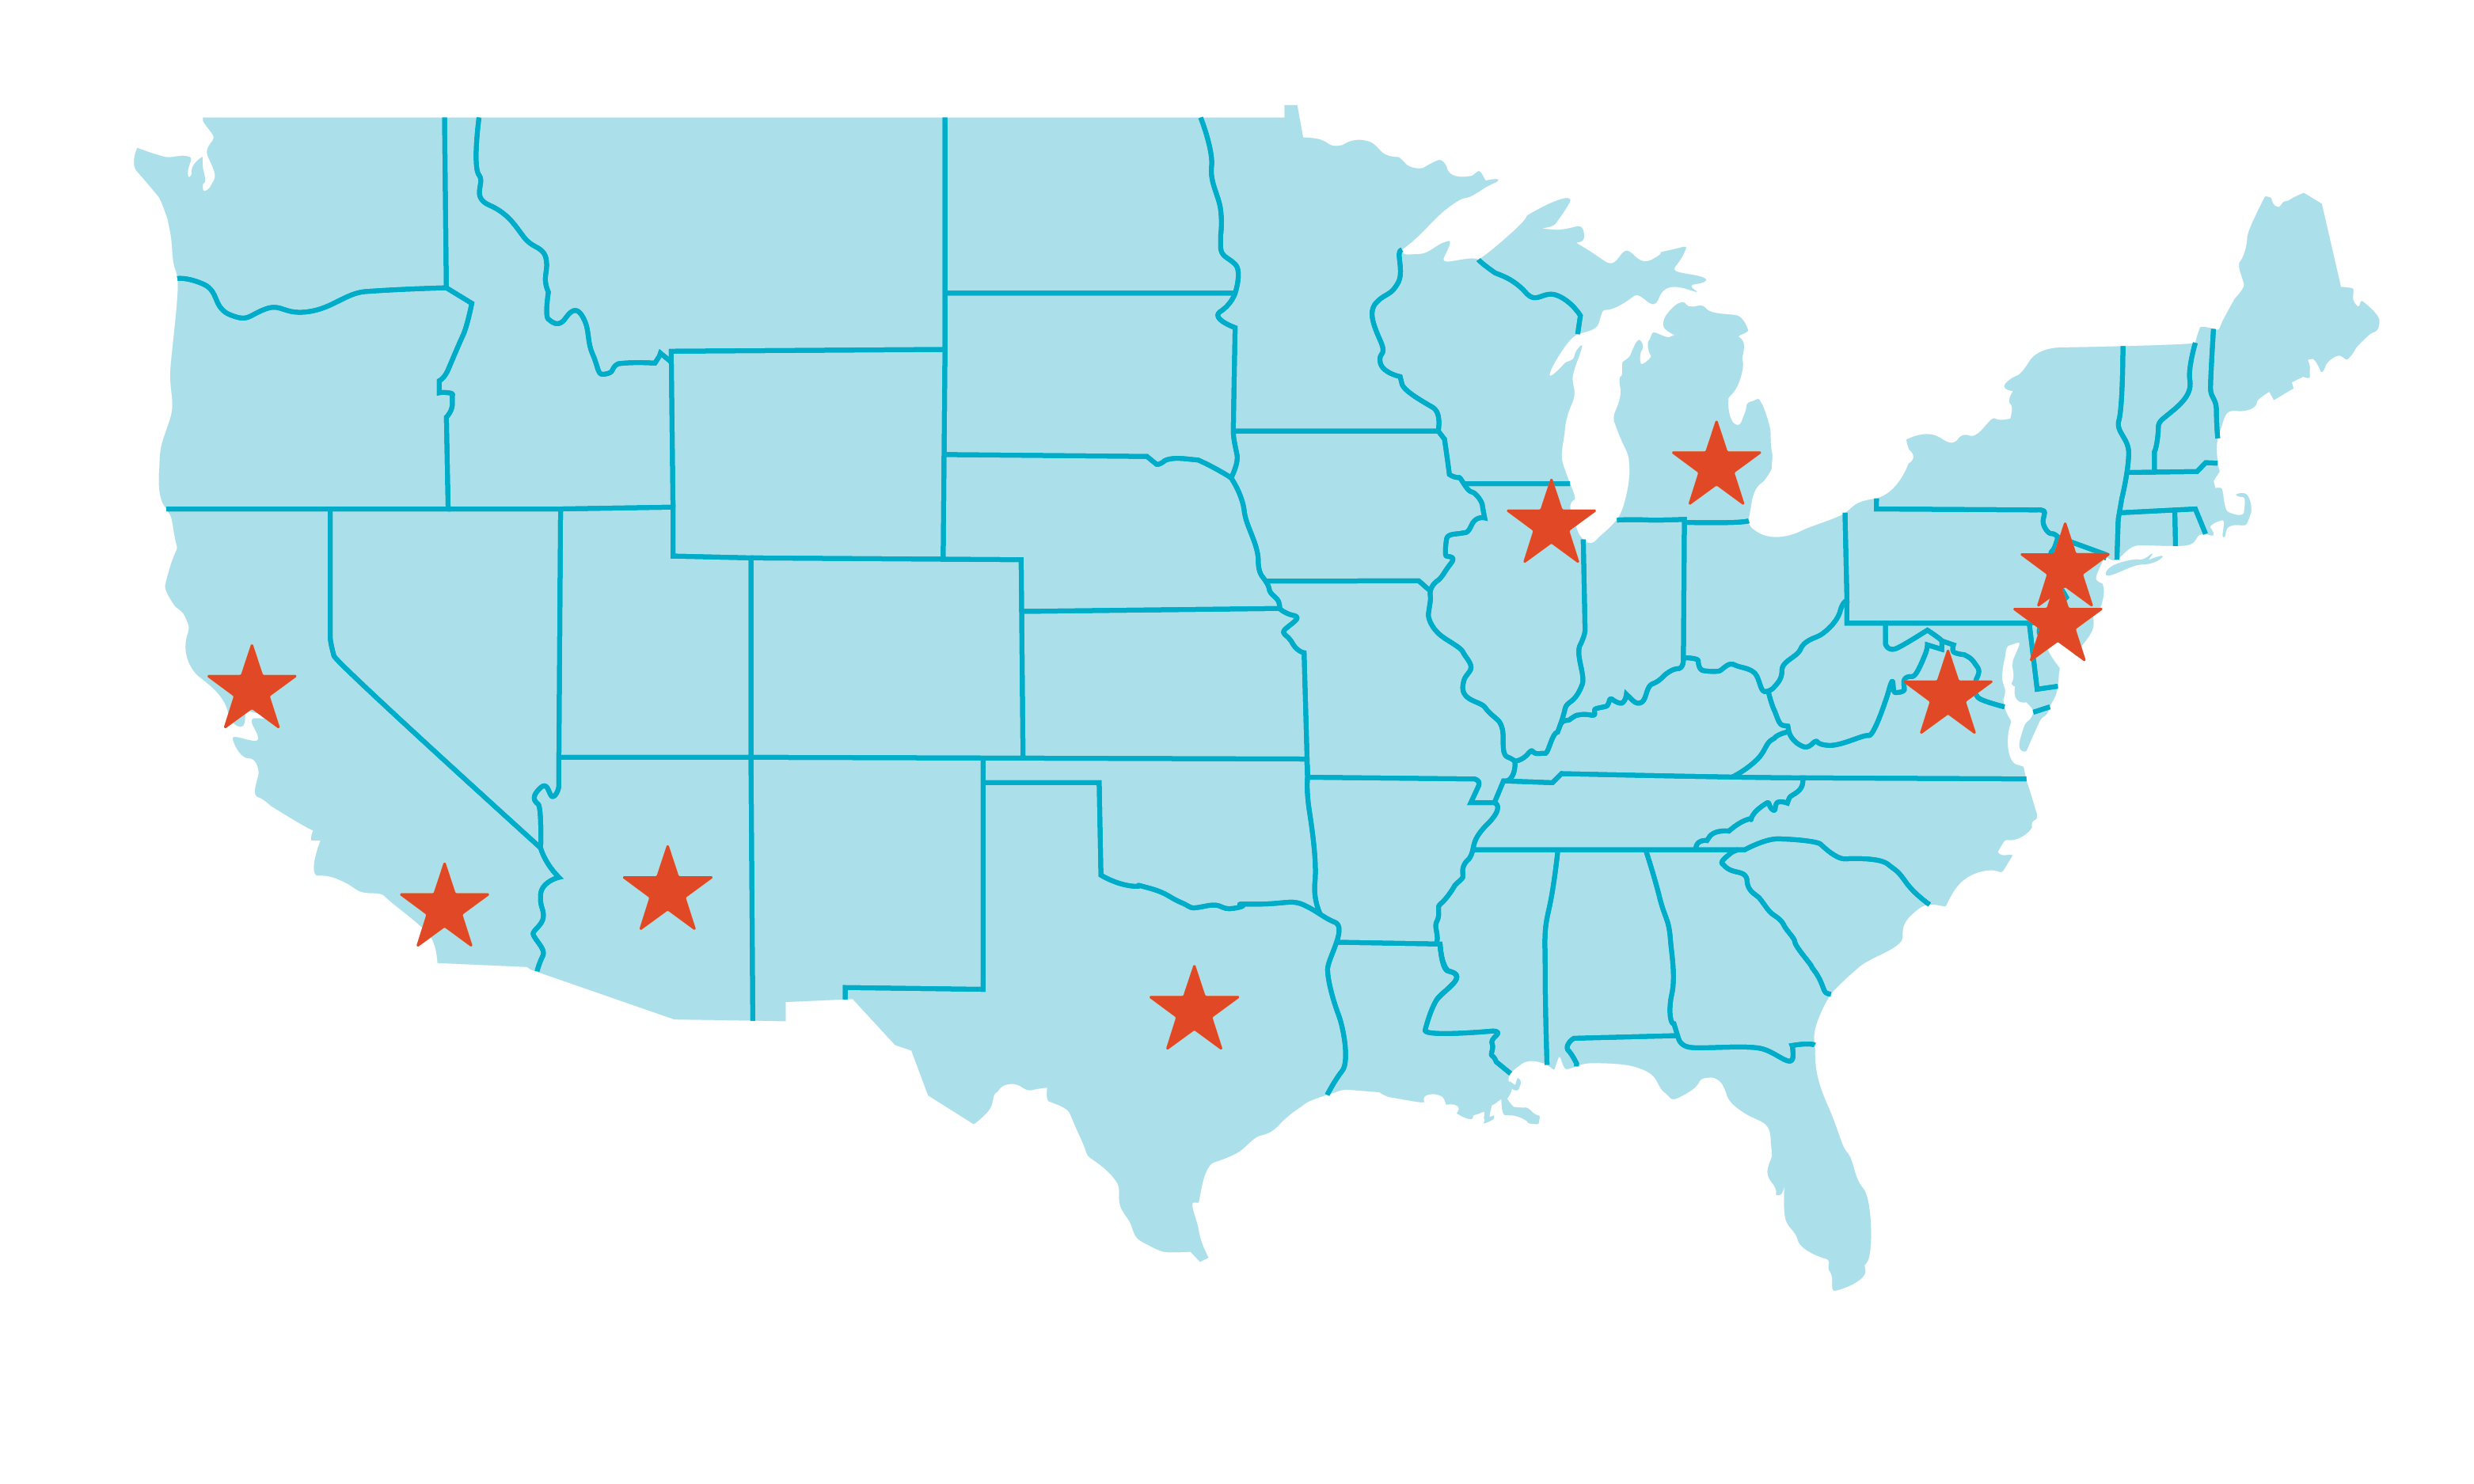 Map with stars on california, arizona, texas, illinois, michigan, virginia, new jersey, connecticut